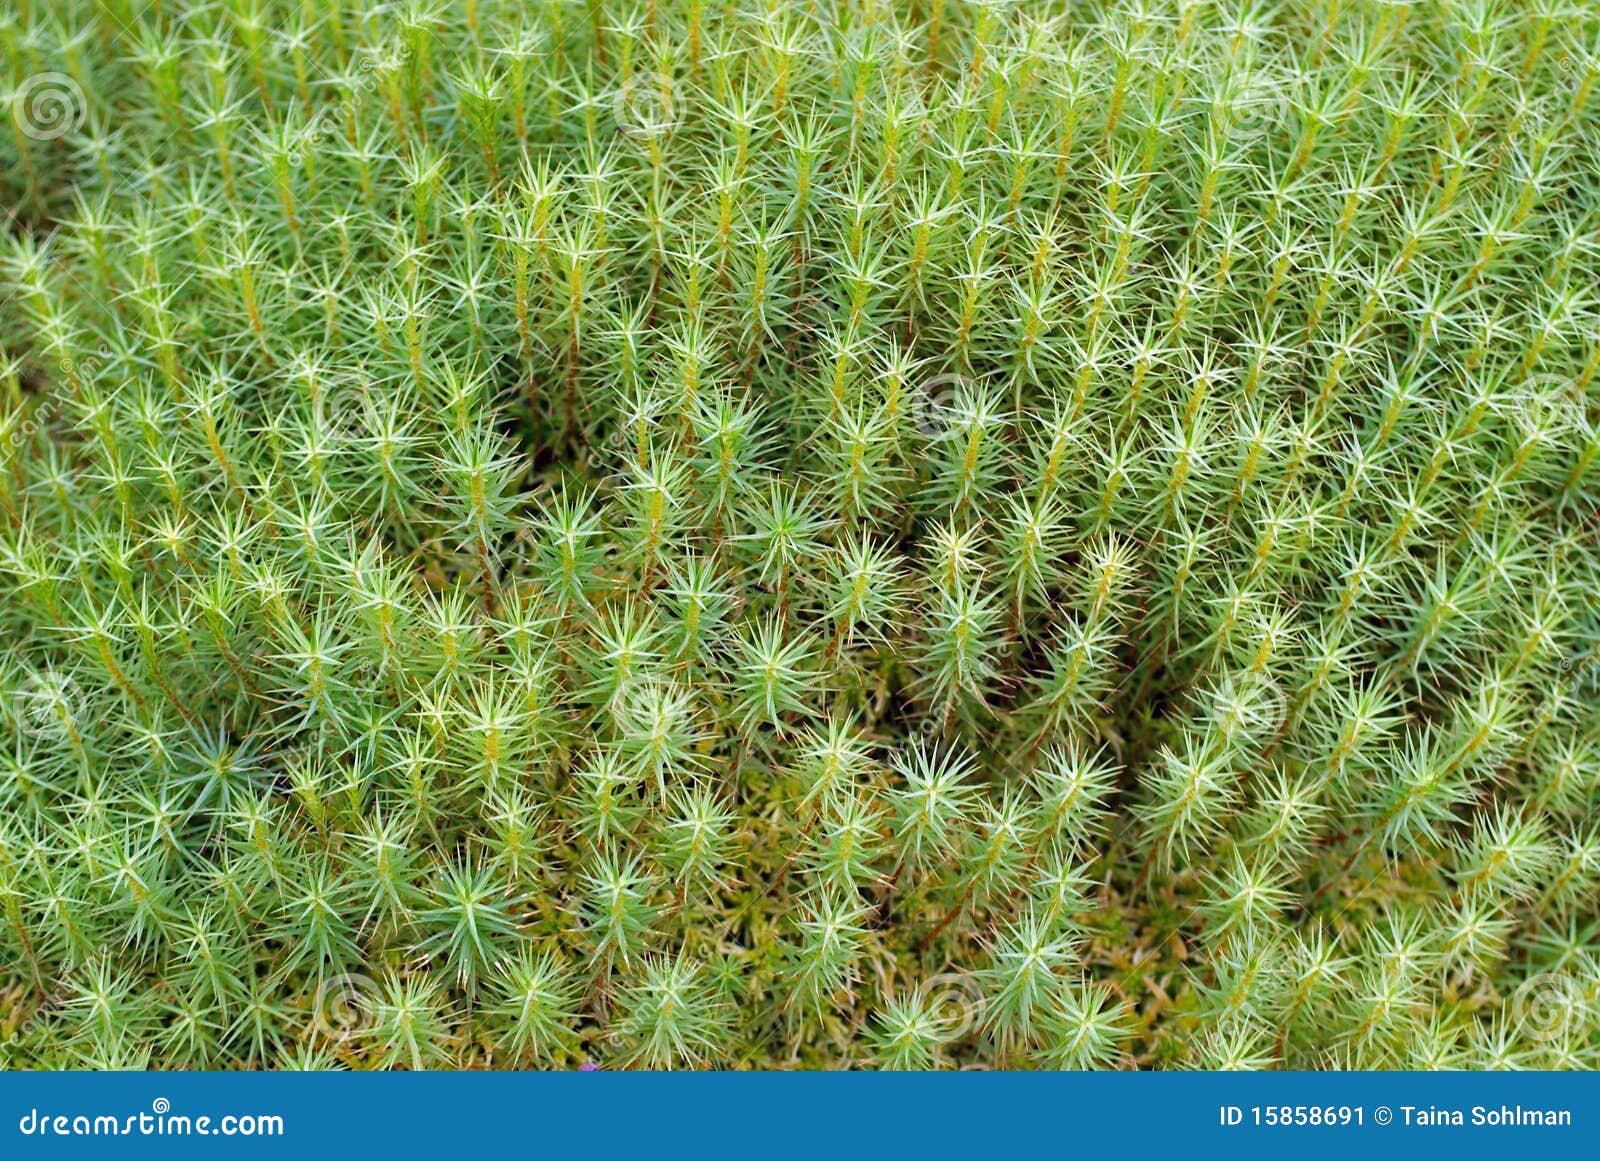 green moss background (polytrichum commune)